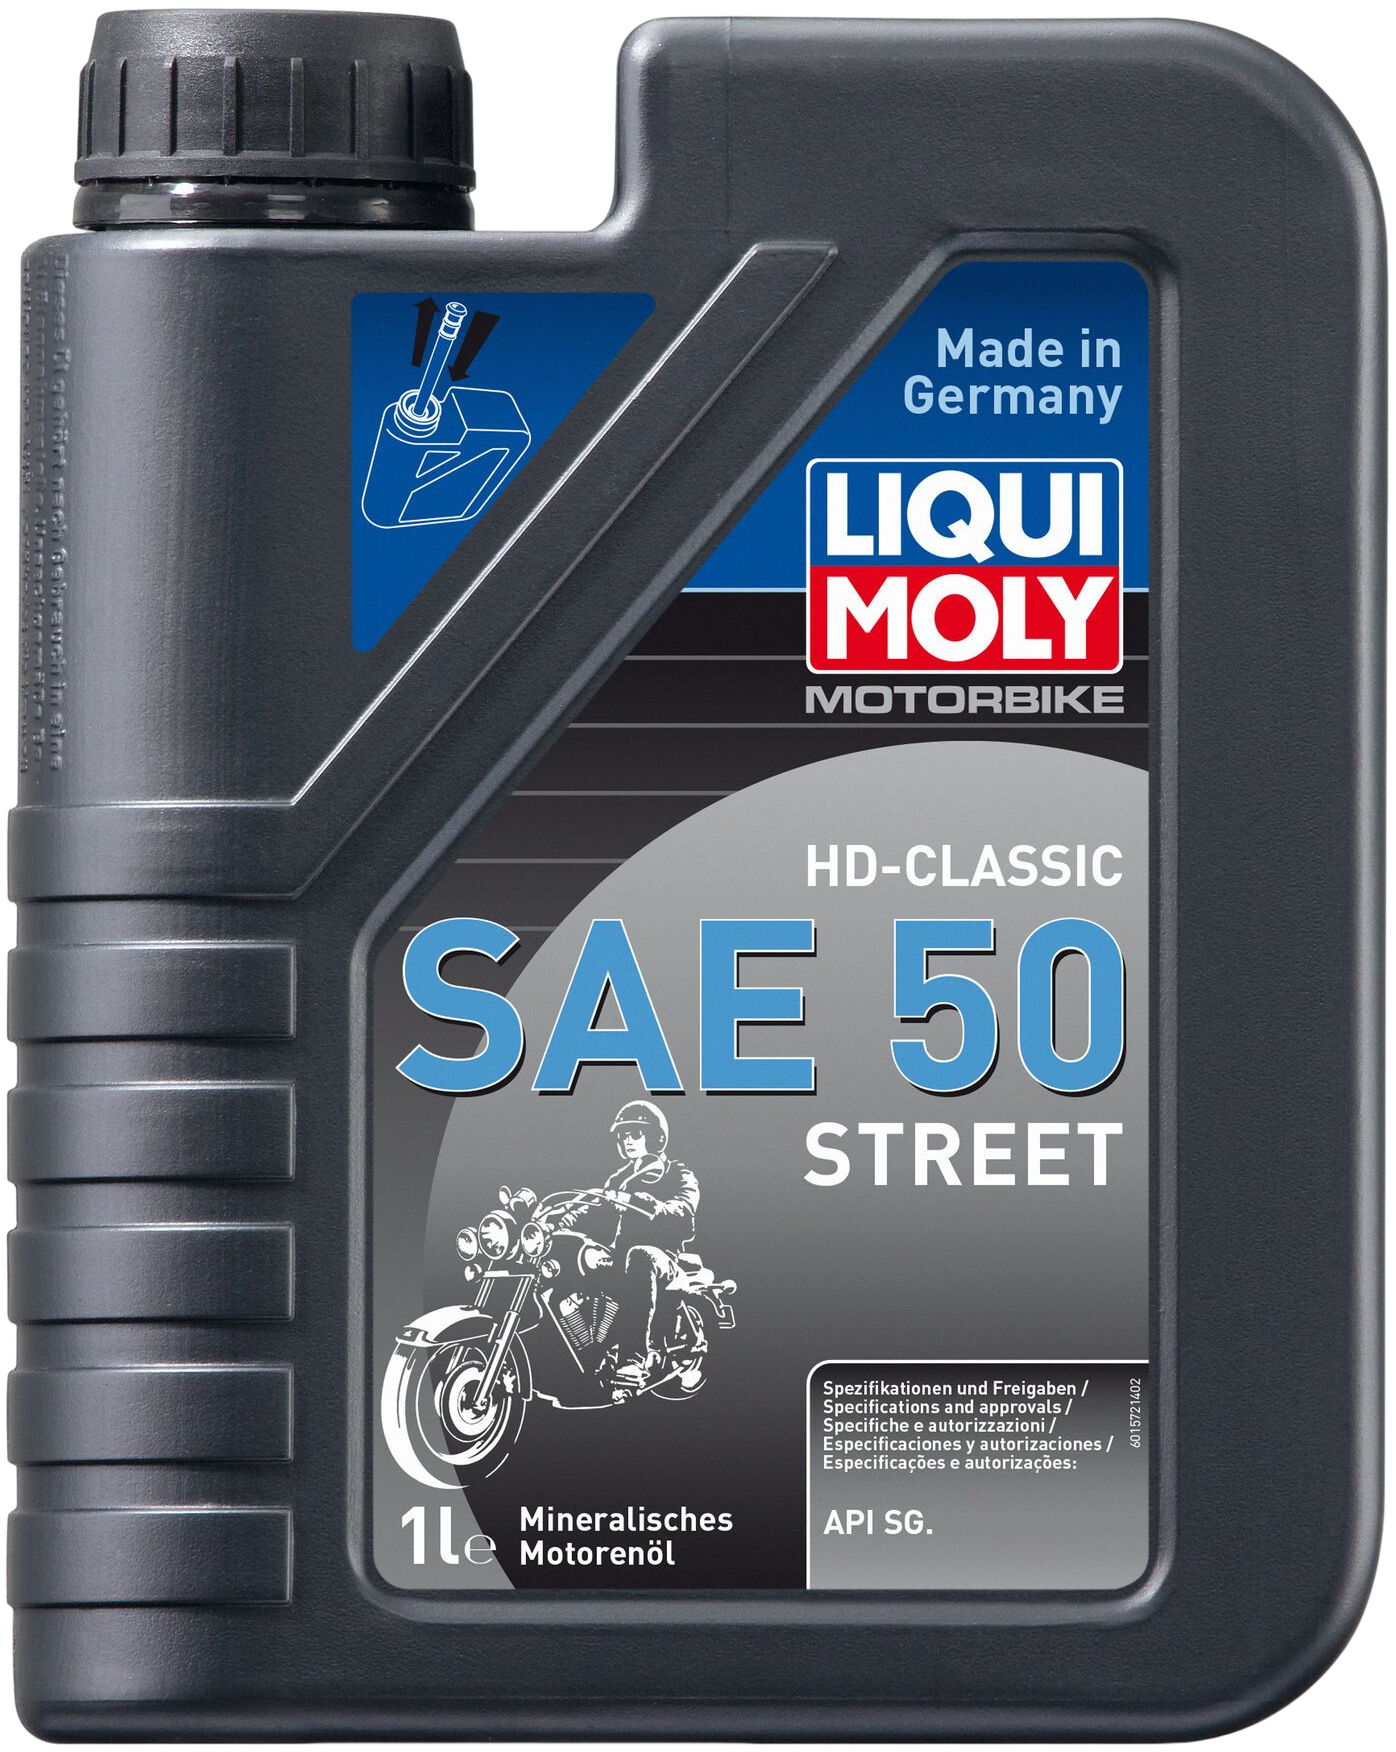 Liqui Moly Motorbike HD-Classic SAE 50 Street, 1 lt